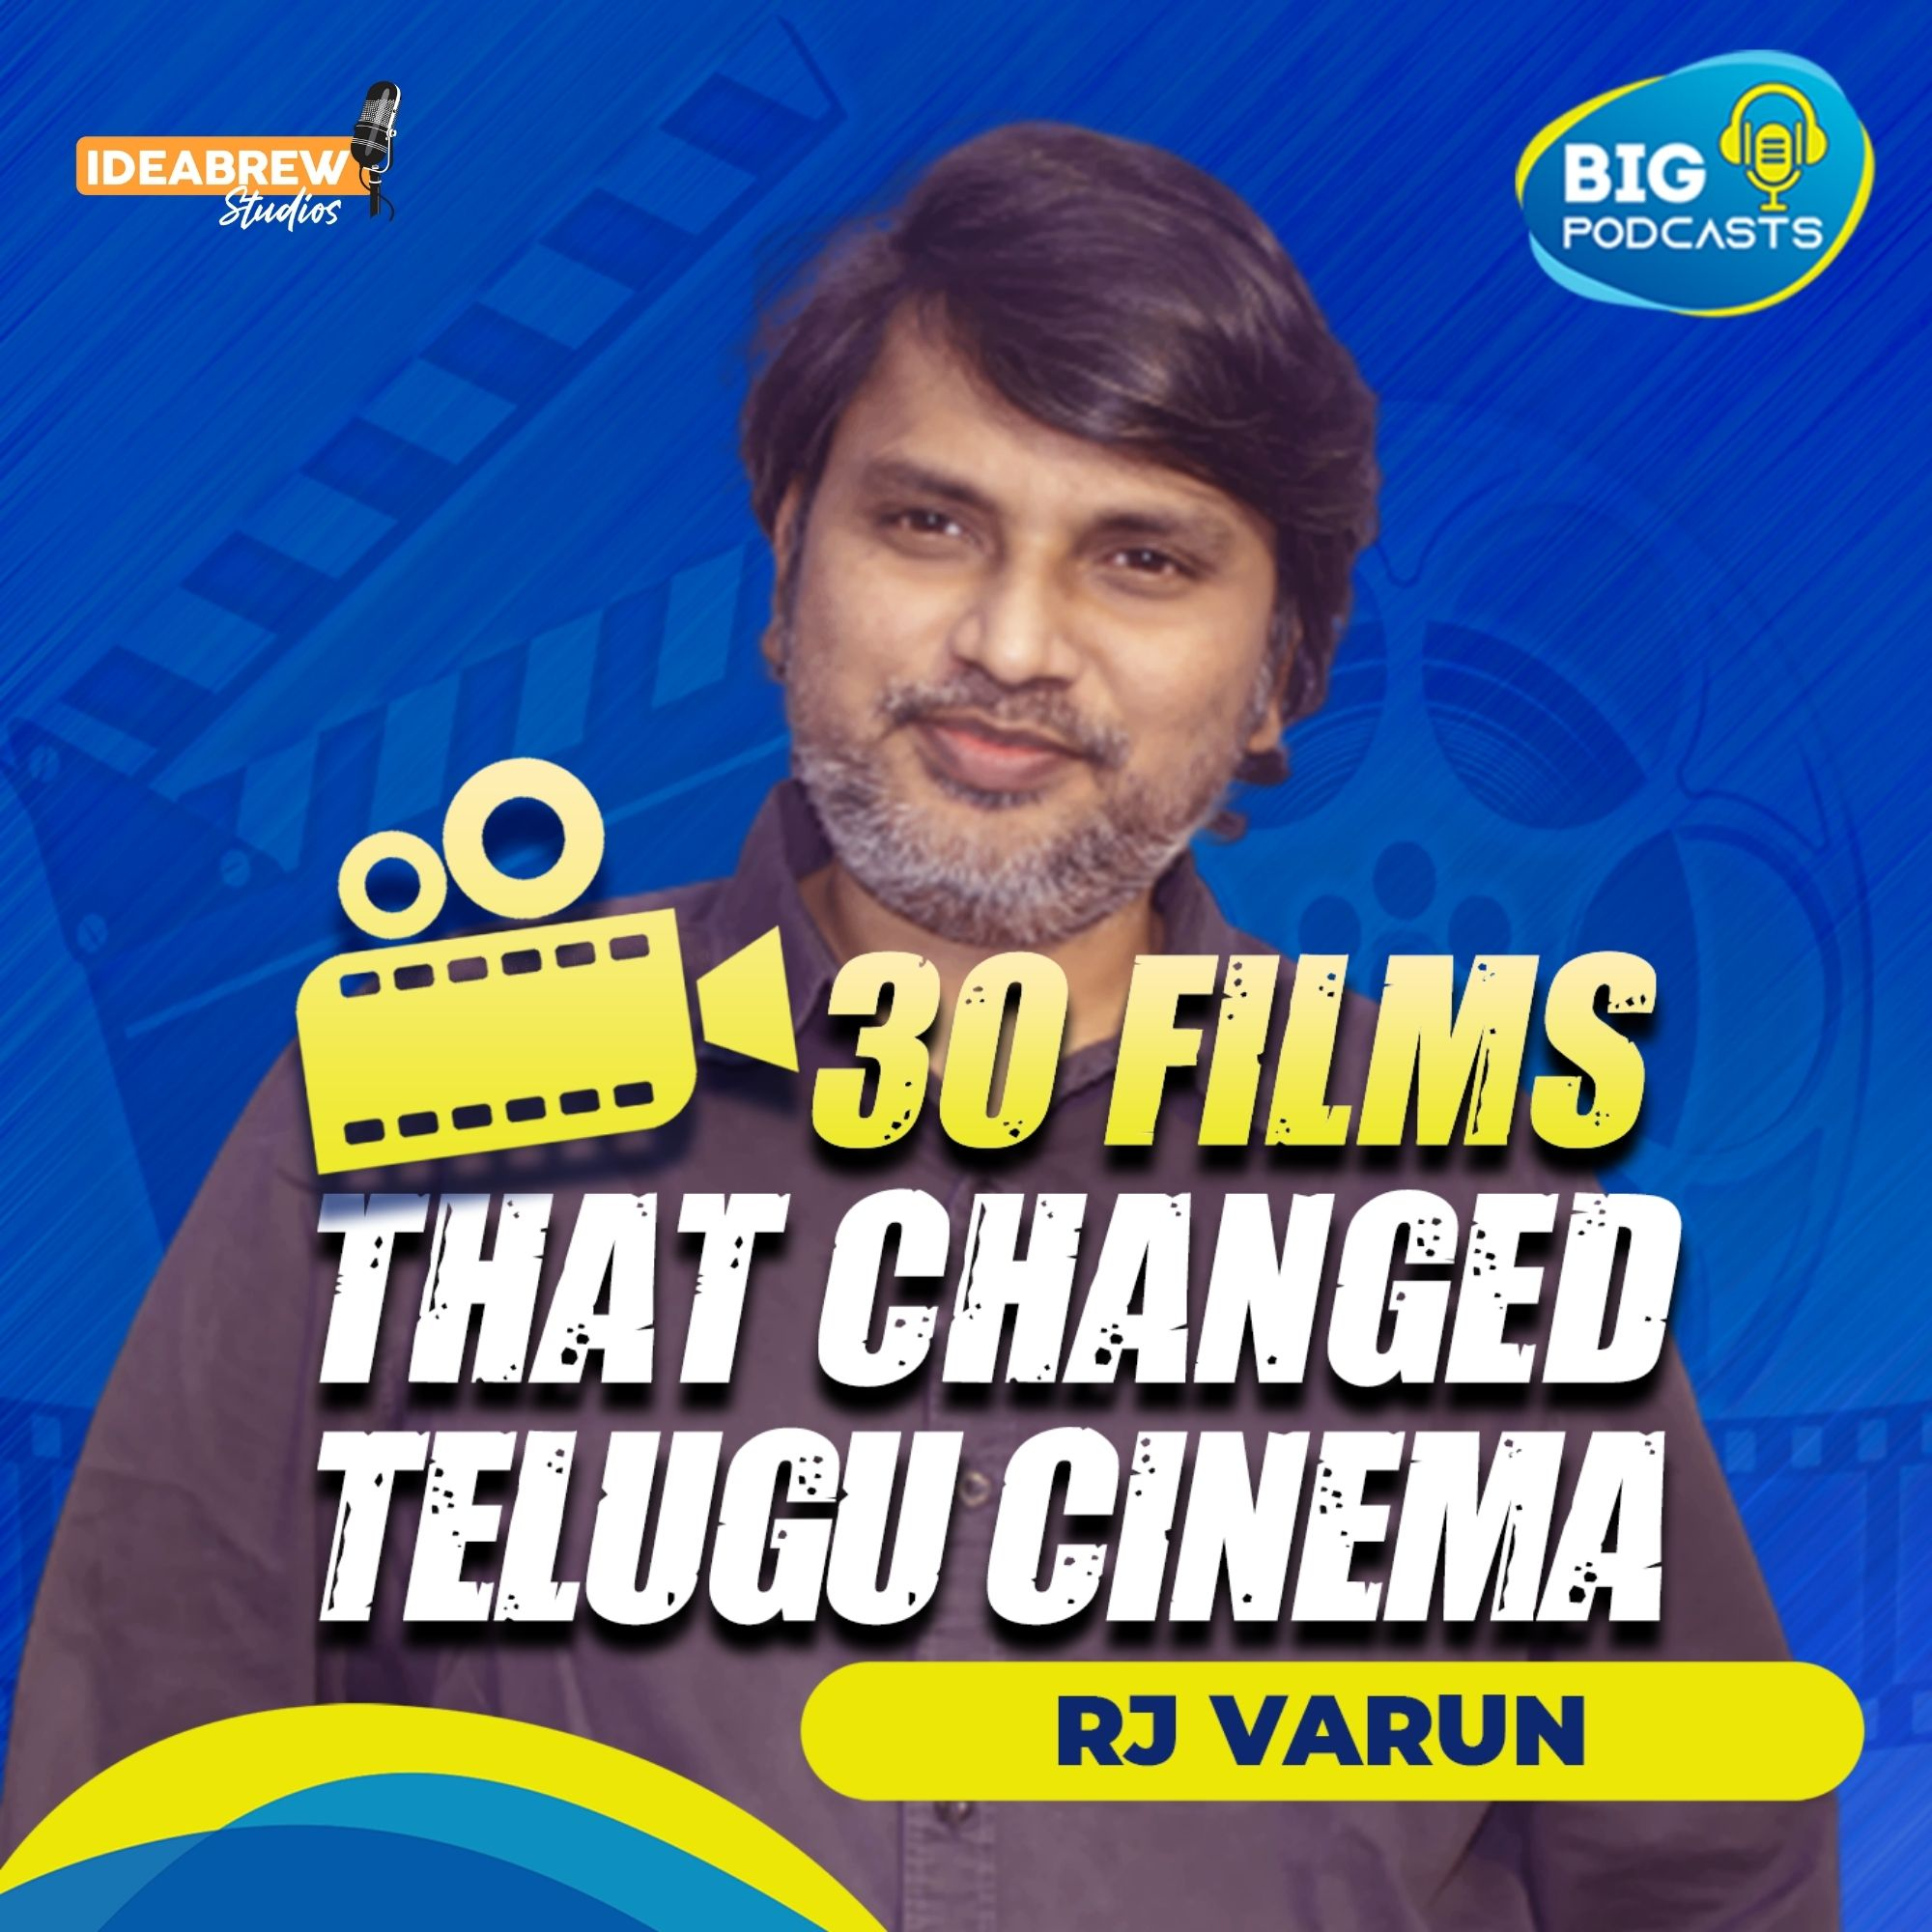 30 Films that changed Telugu cinema